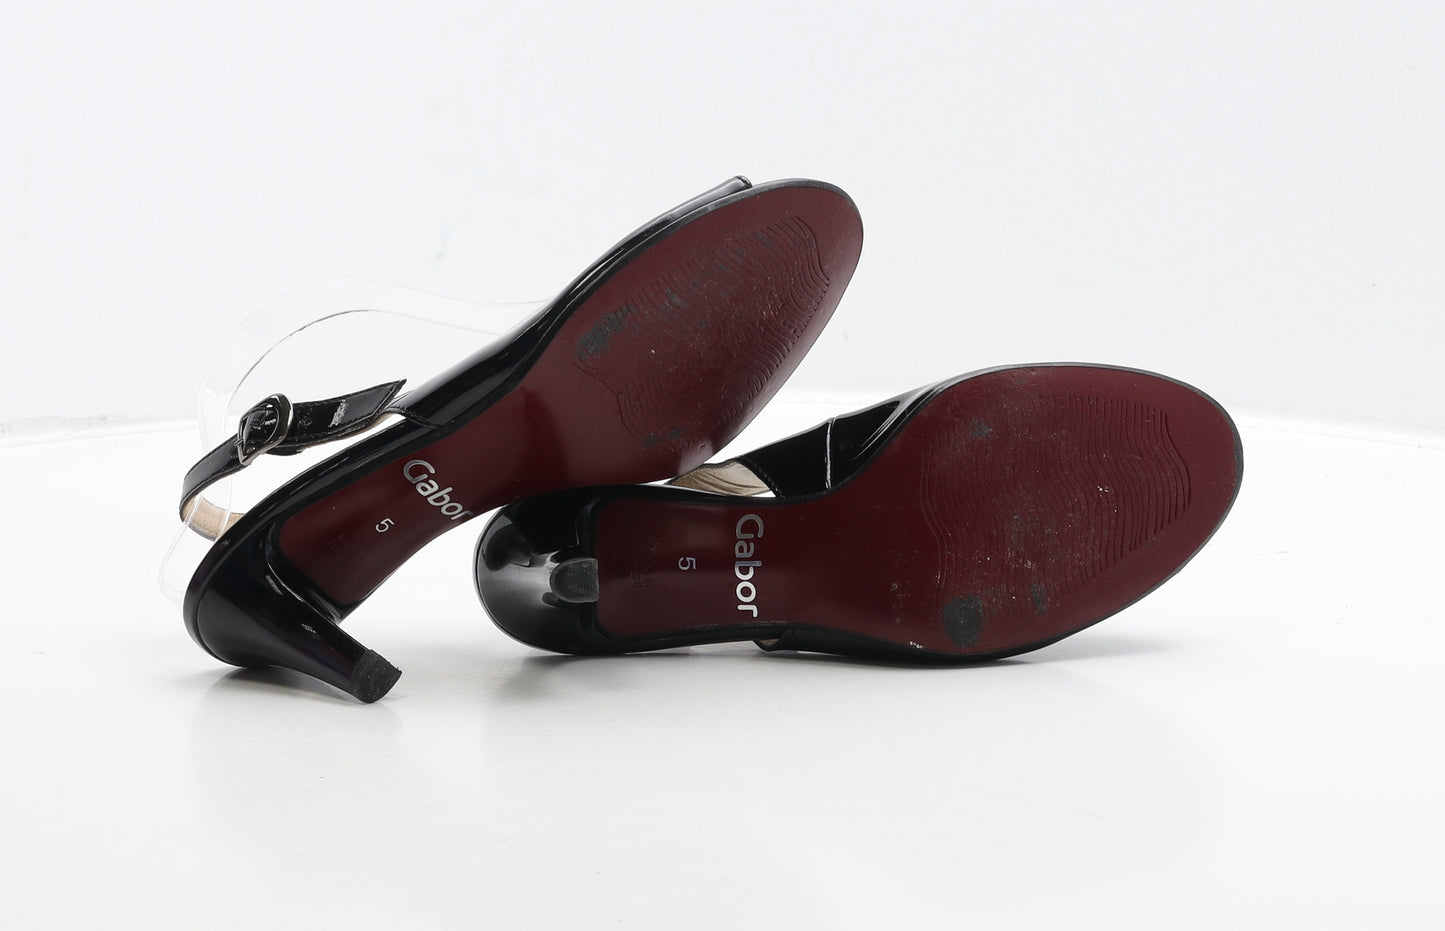 Gabor Womens Black Patent Leather Slingback Heel UK 5